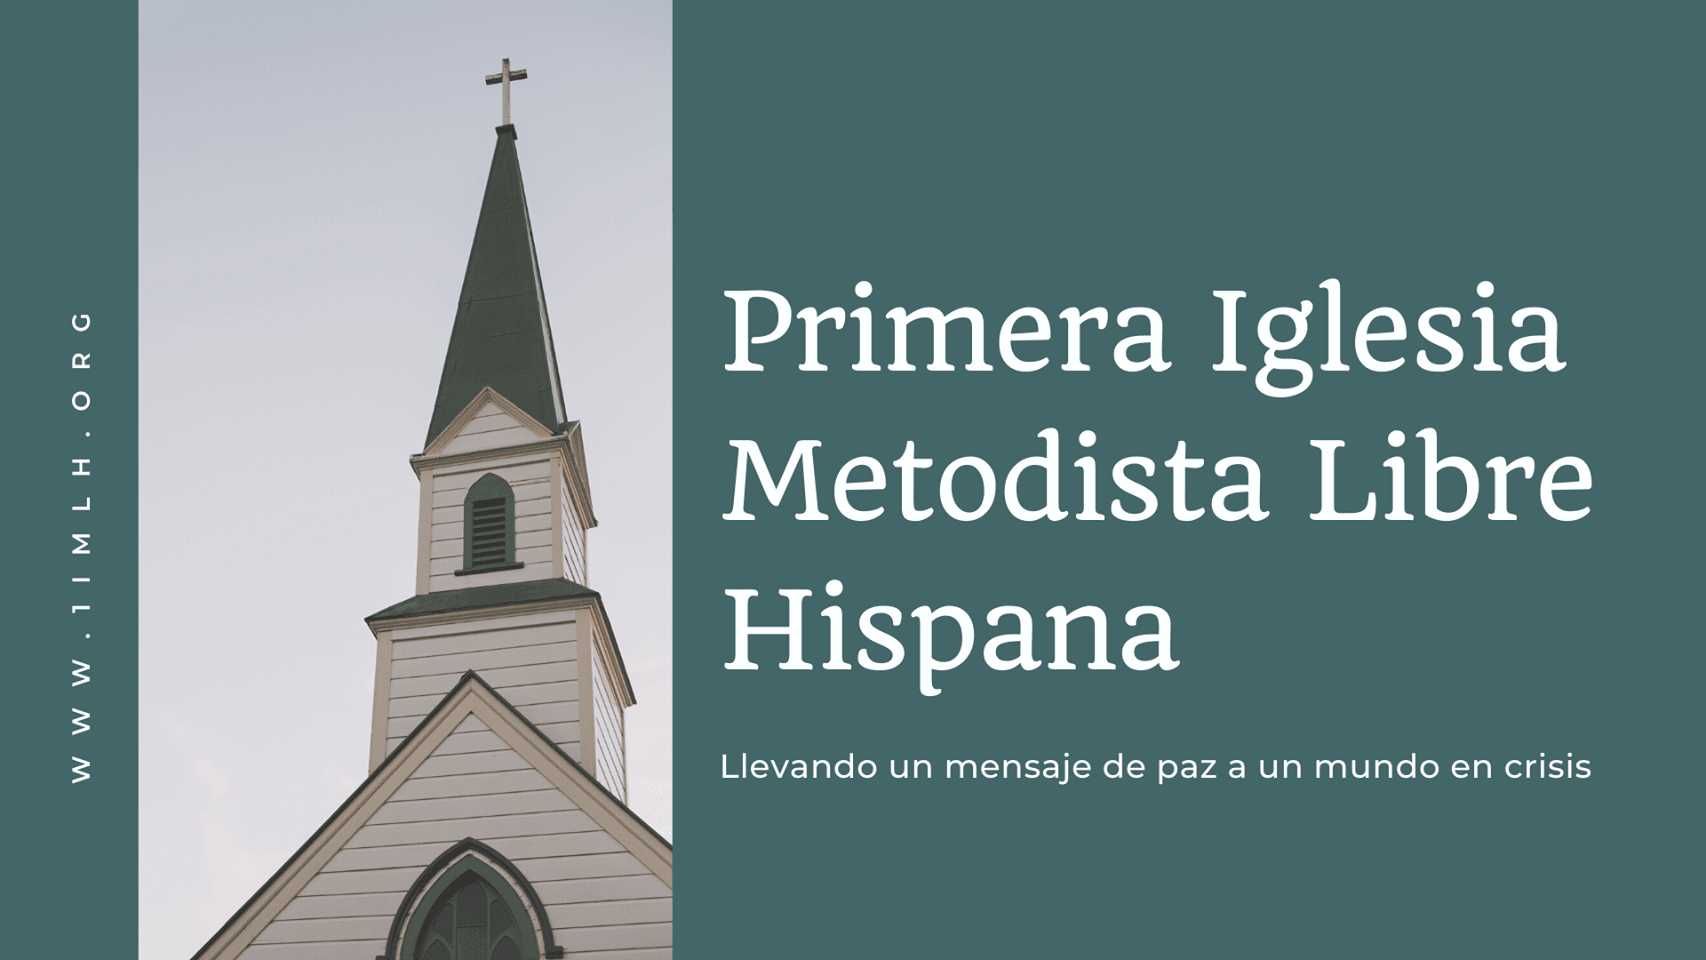 Free Spanish Methodist Church Pantry